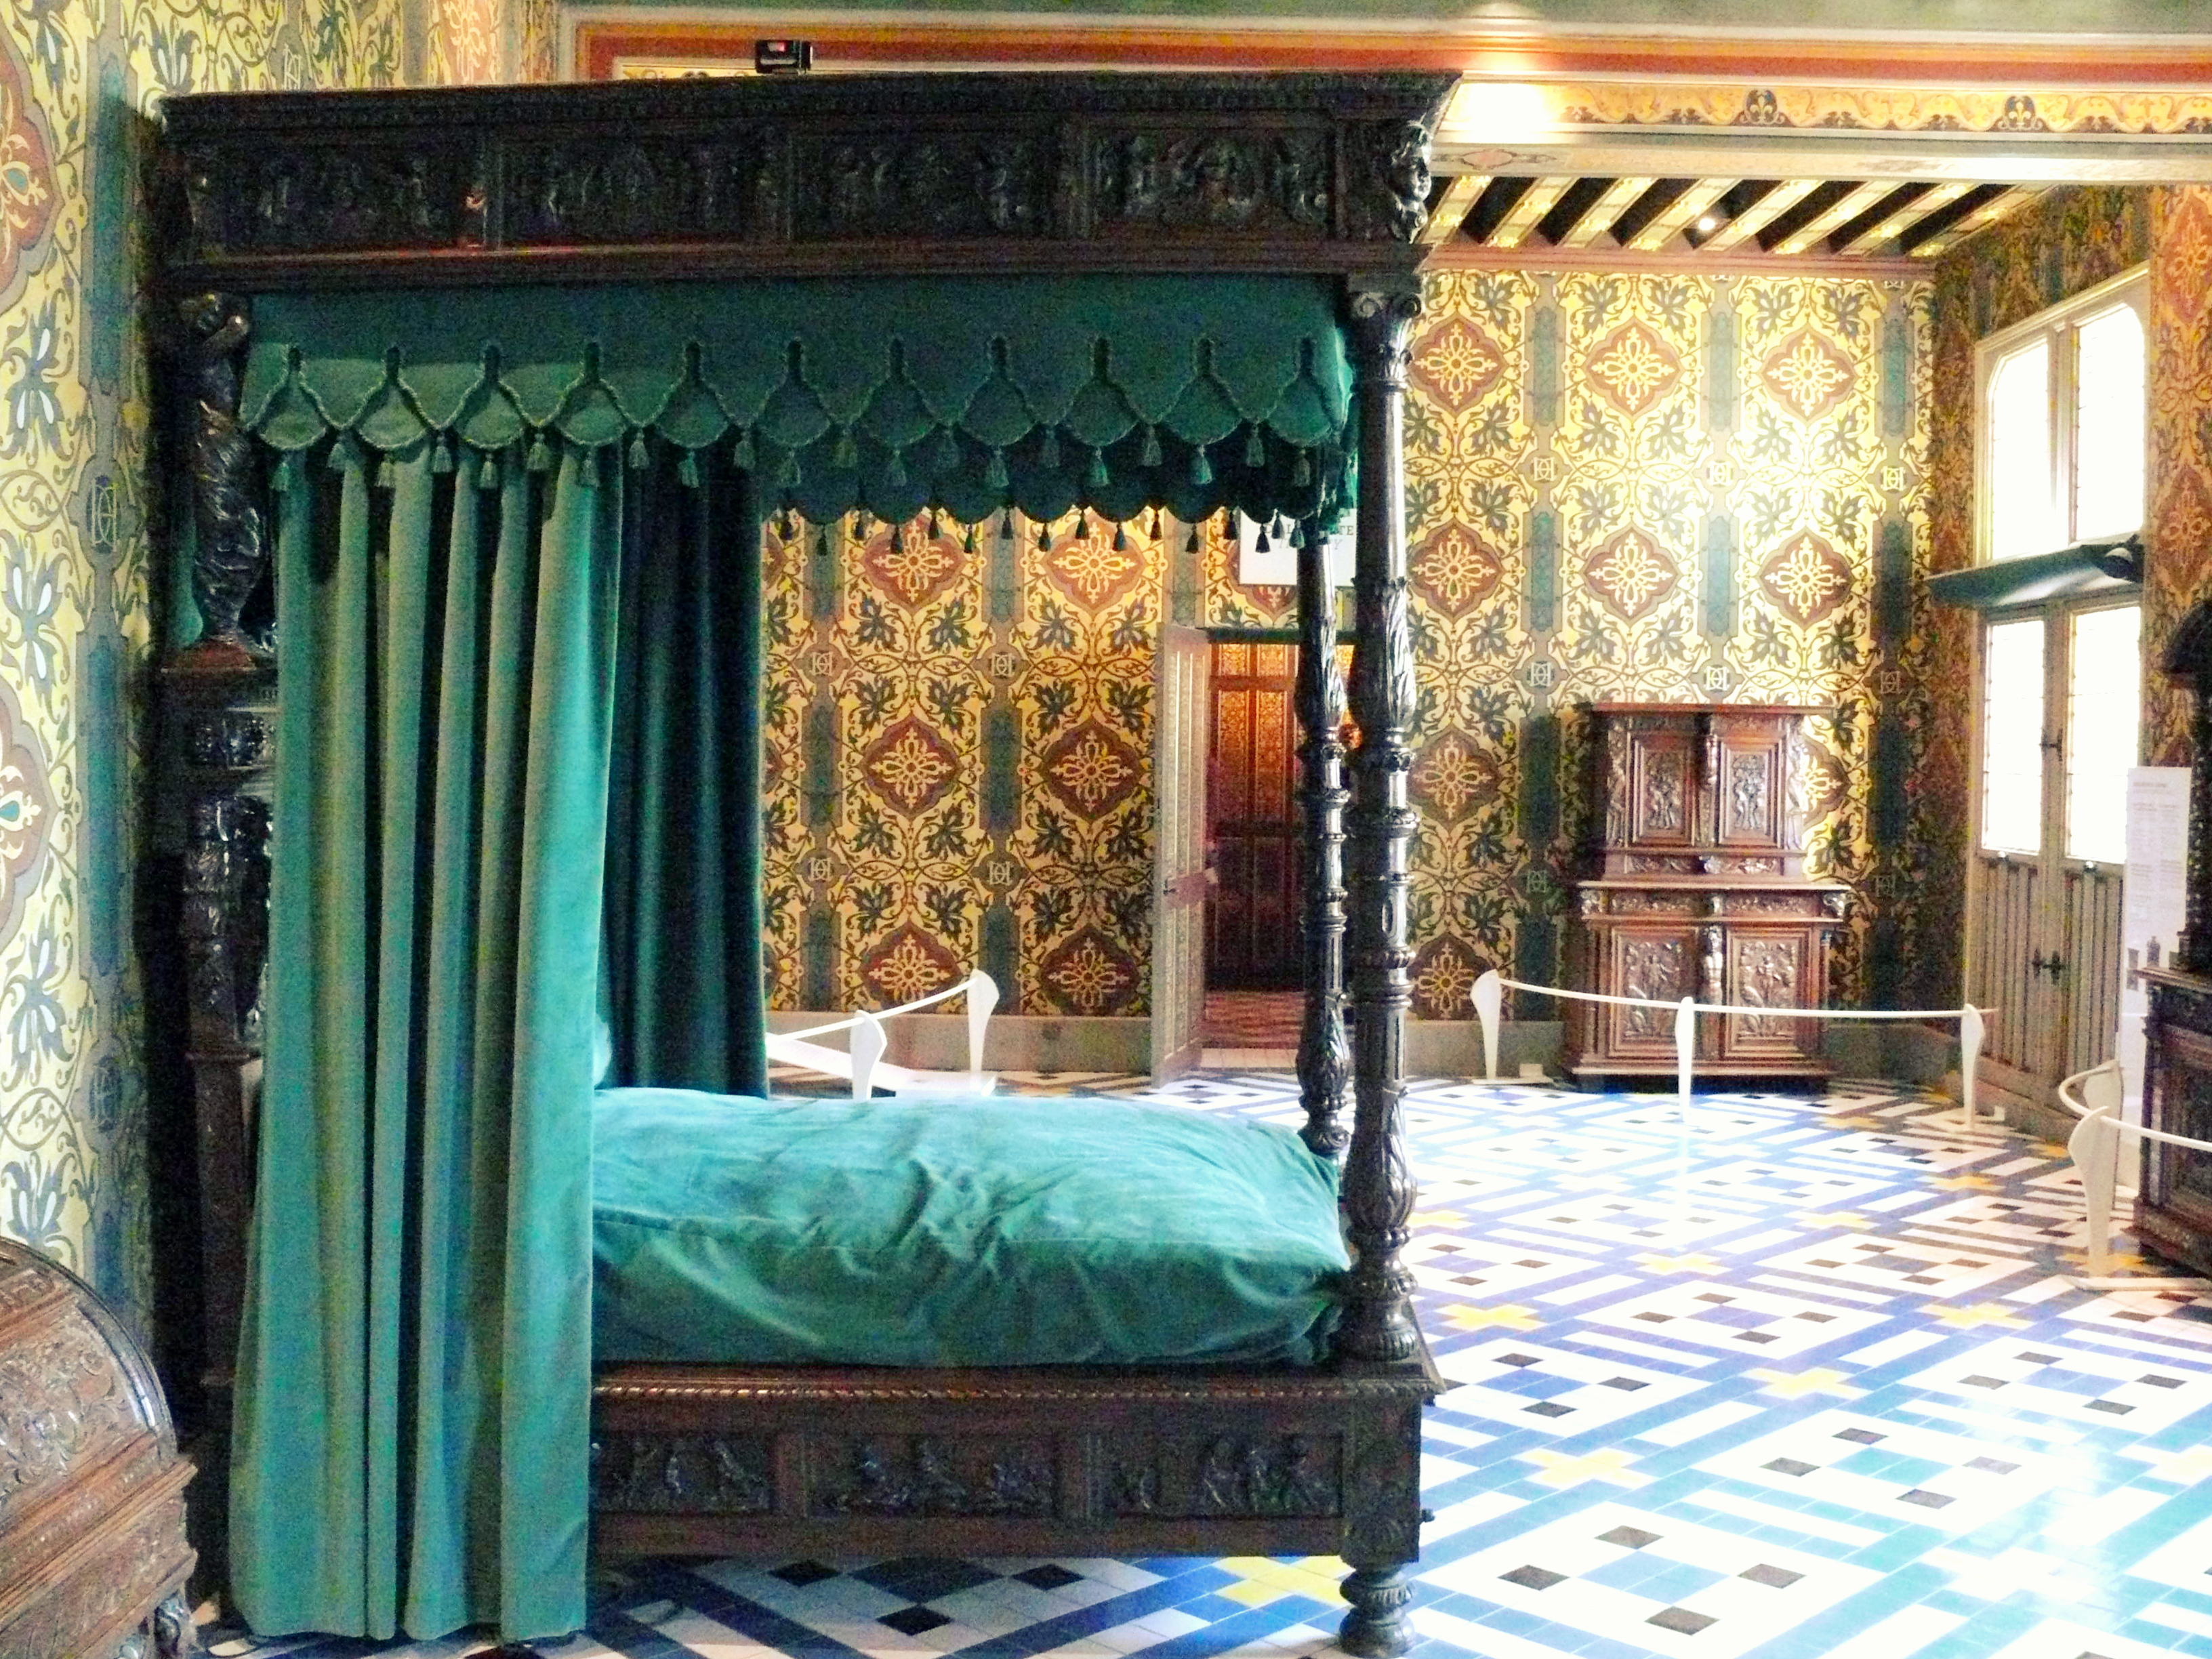 Renaissance style interior